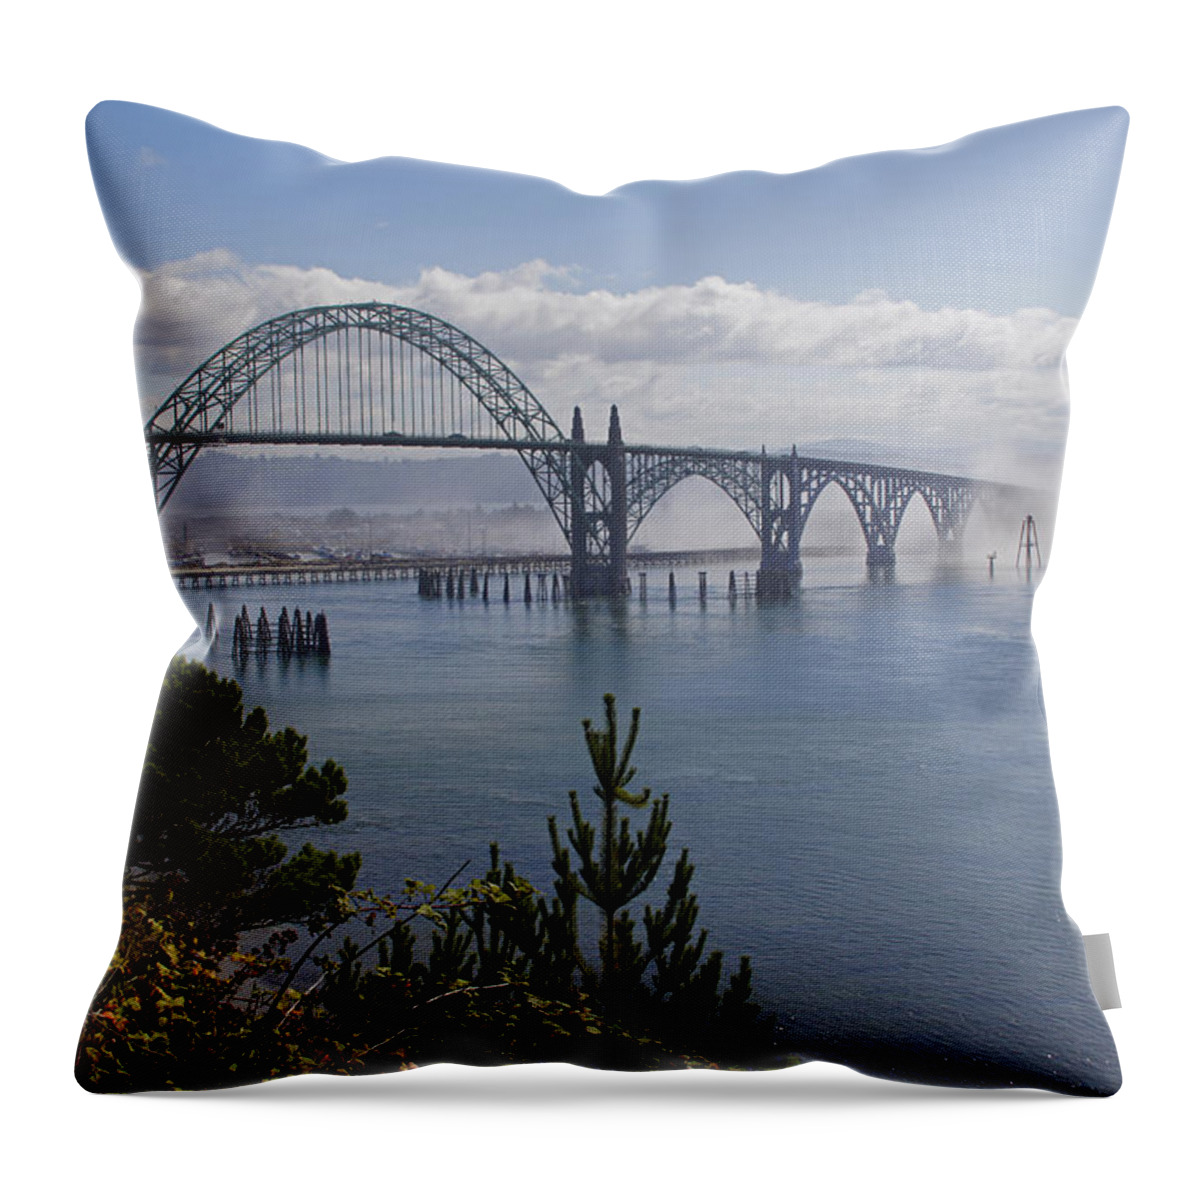 Yaquina Bay Bridge Throw Pillow featuring the photograph Yaquina Bay Bridge by Mick Anderson